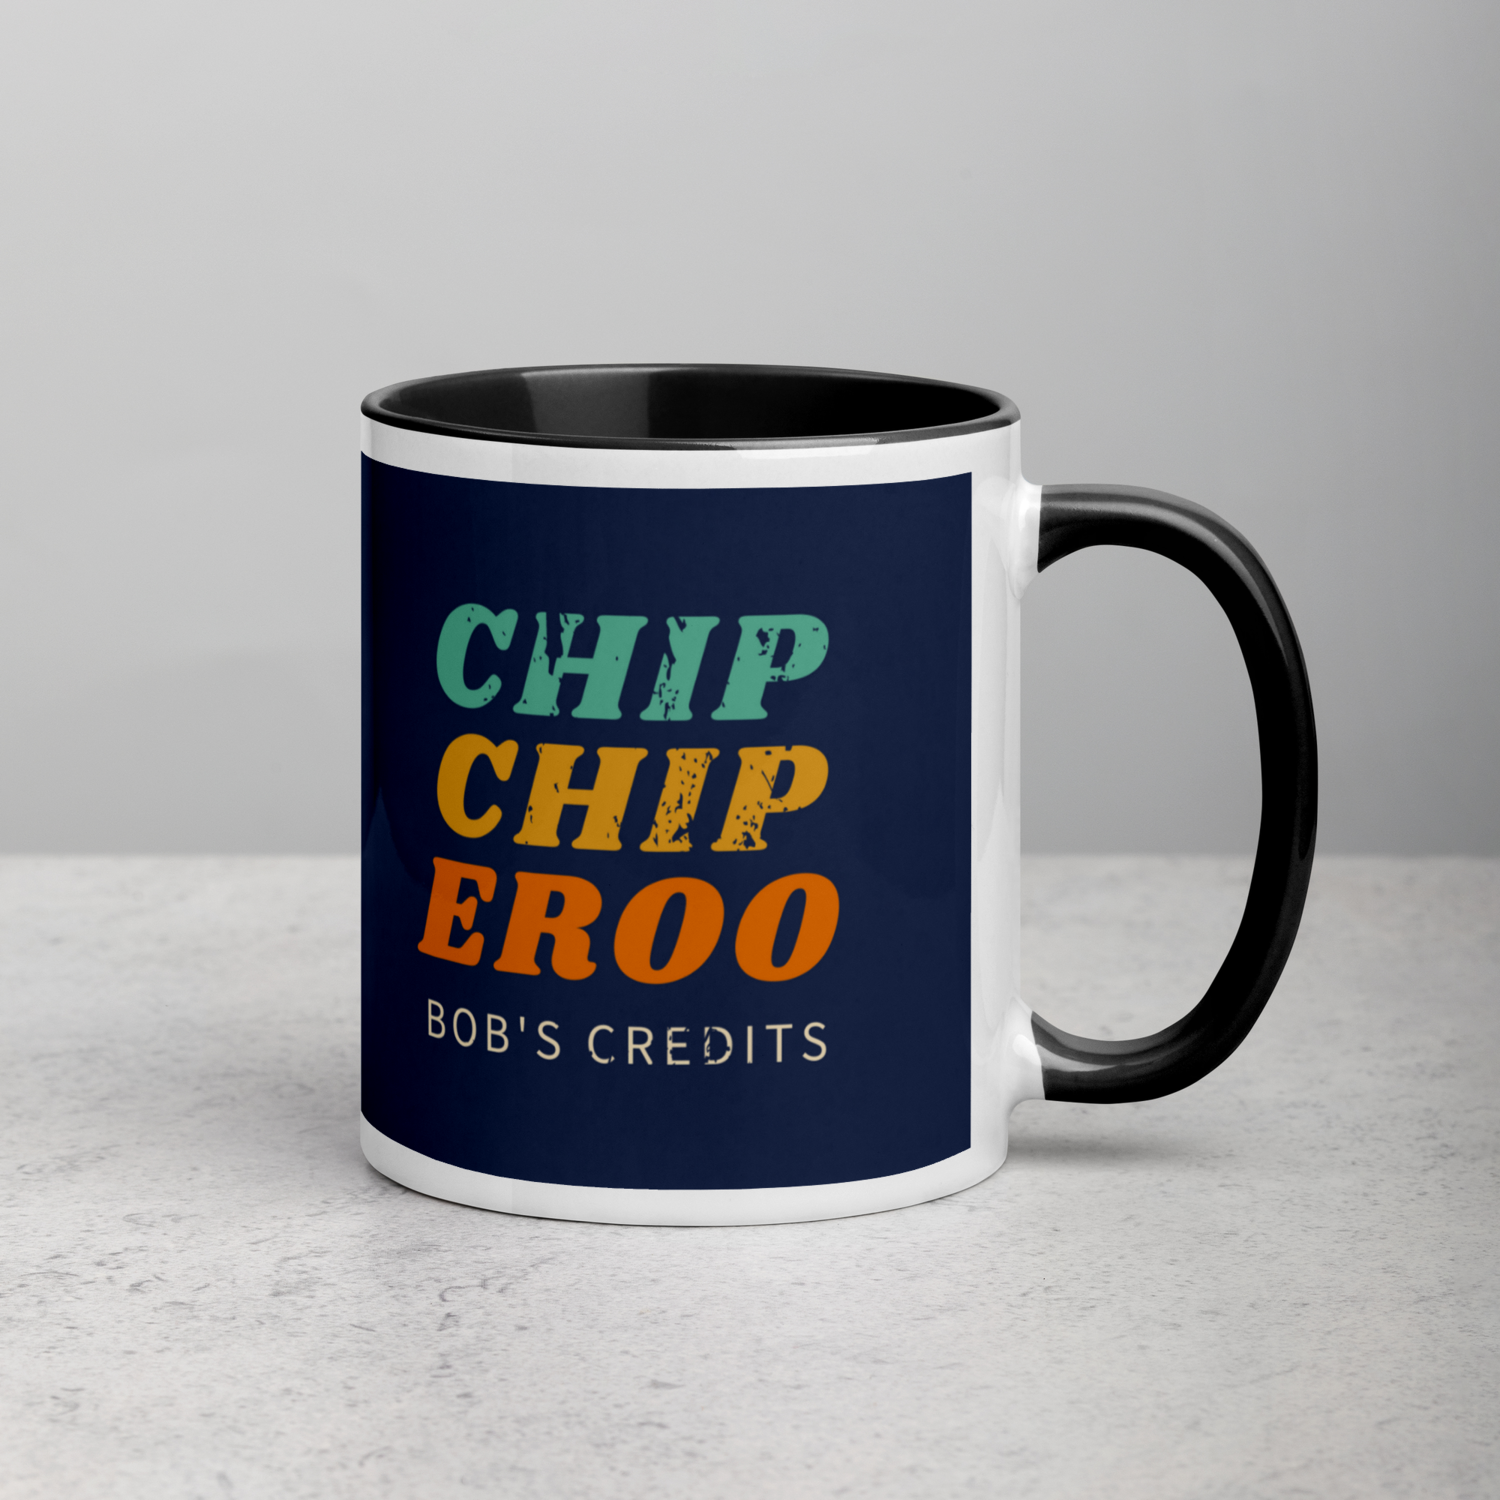 Chip Chip Eroo - Bob's Credits Mug — Bob's Credits